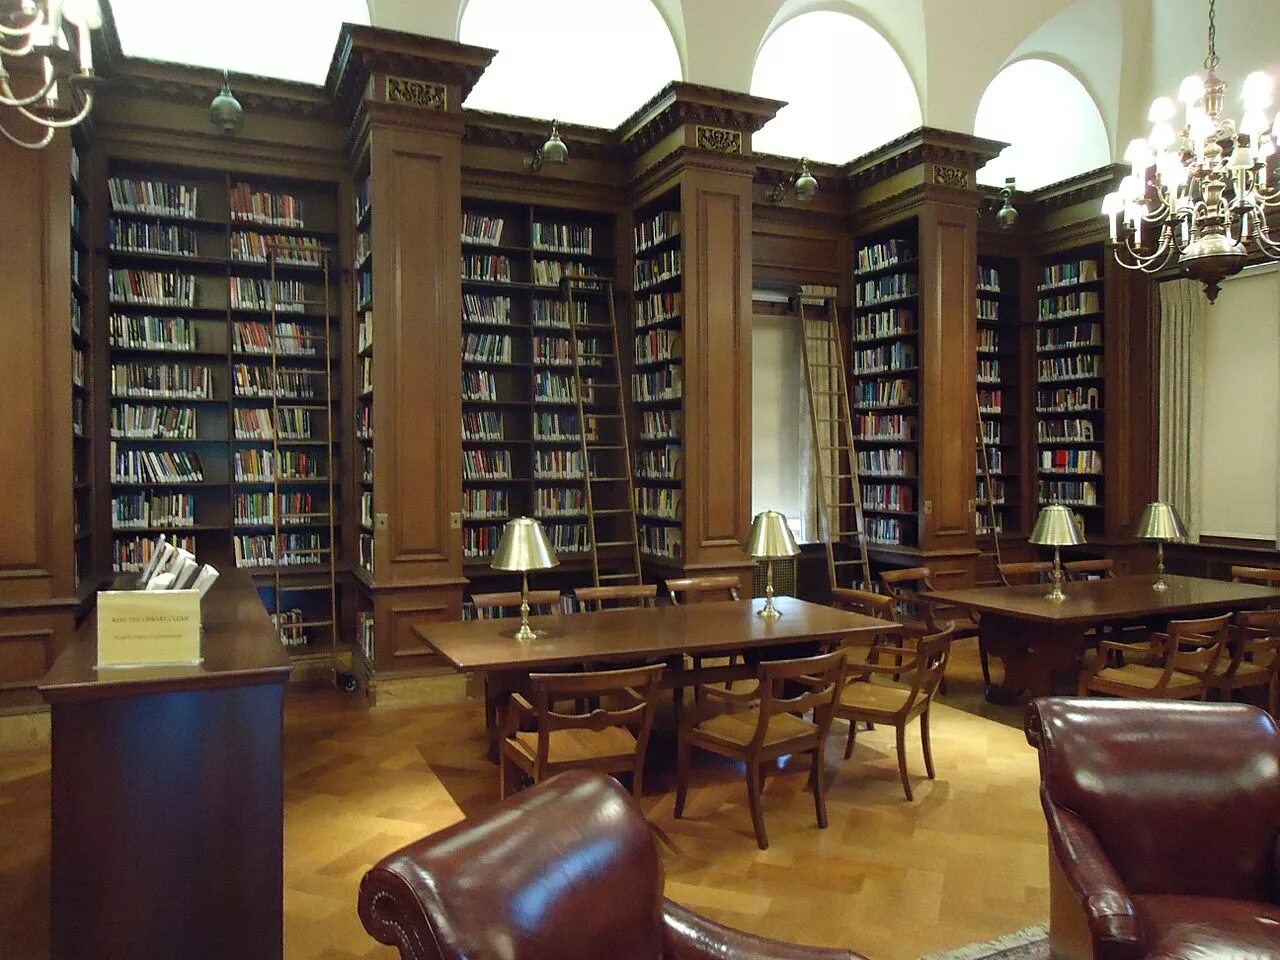 Библиотека 1 час. Библиотека Кирби, колледж Лафайет, Истон, штат Пенсильвания, США. Колледж Лафайет. Bowdoin College. University Library Shelf.